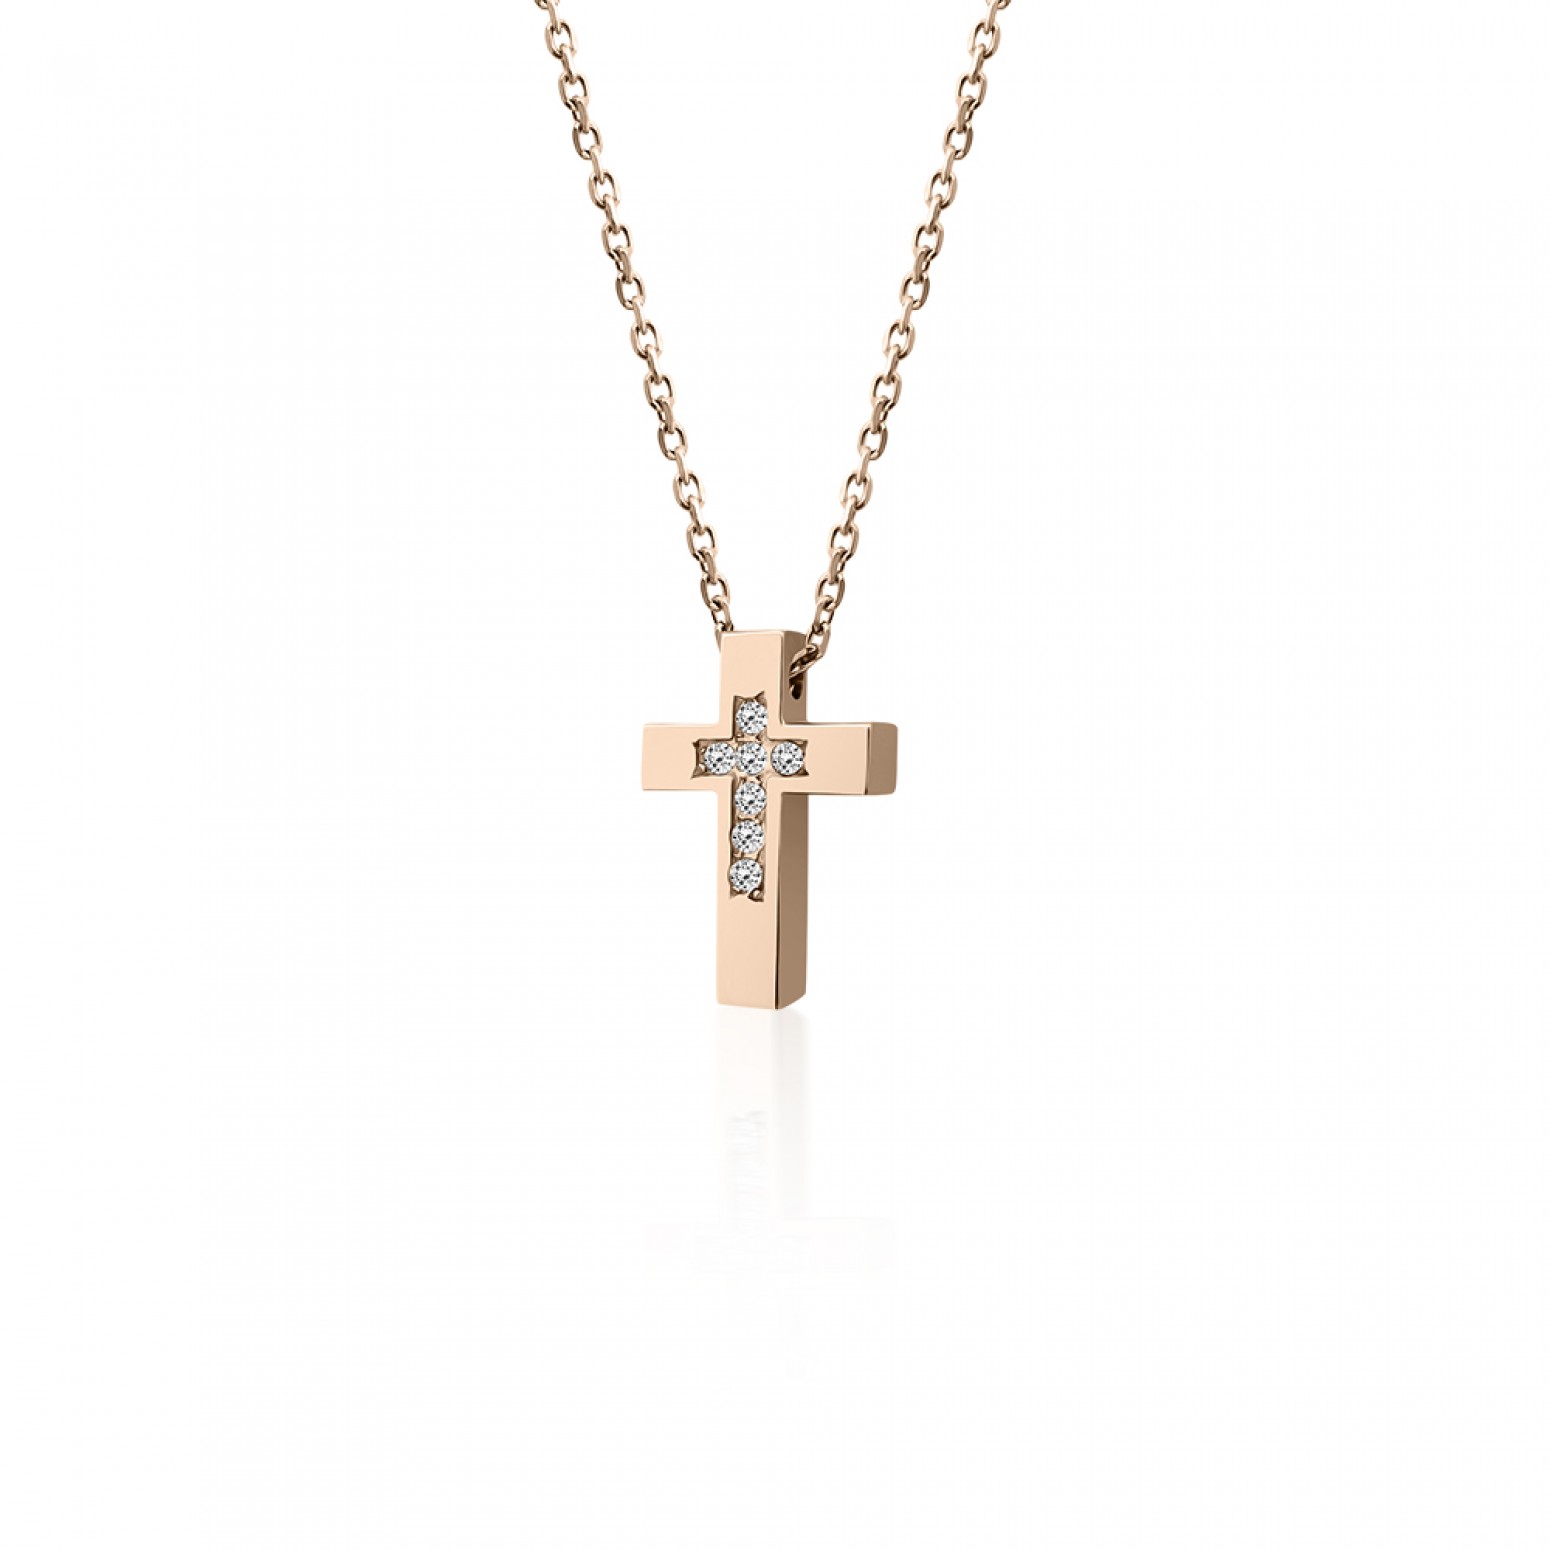 Cross necklace, Κ14 pink gold with zircon, ko5485 NECKLACES Κοσμηματα - chrilia.gr